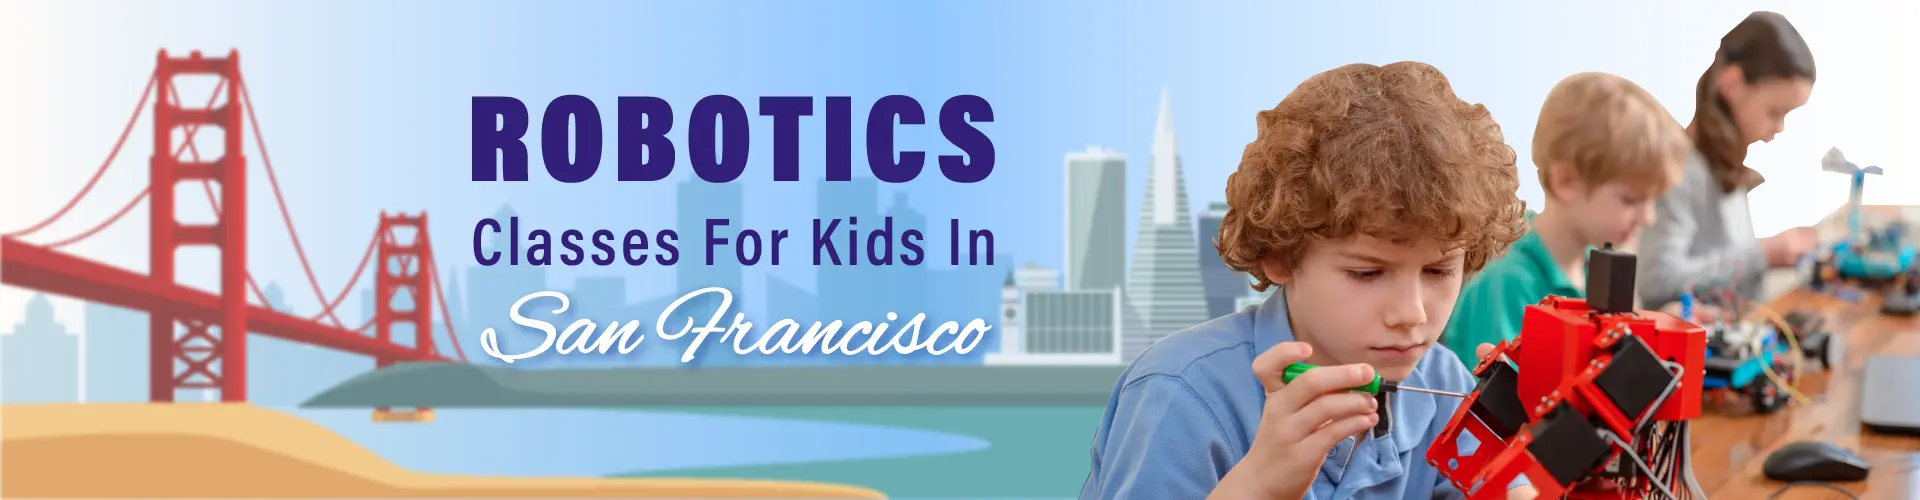 Robotics Classes For Kids in San Francisco